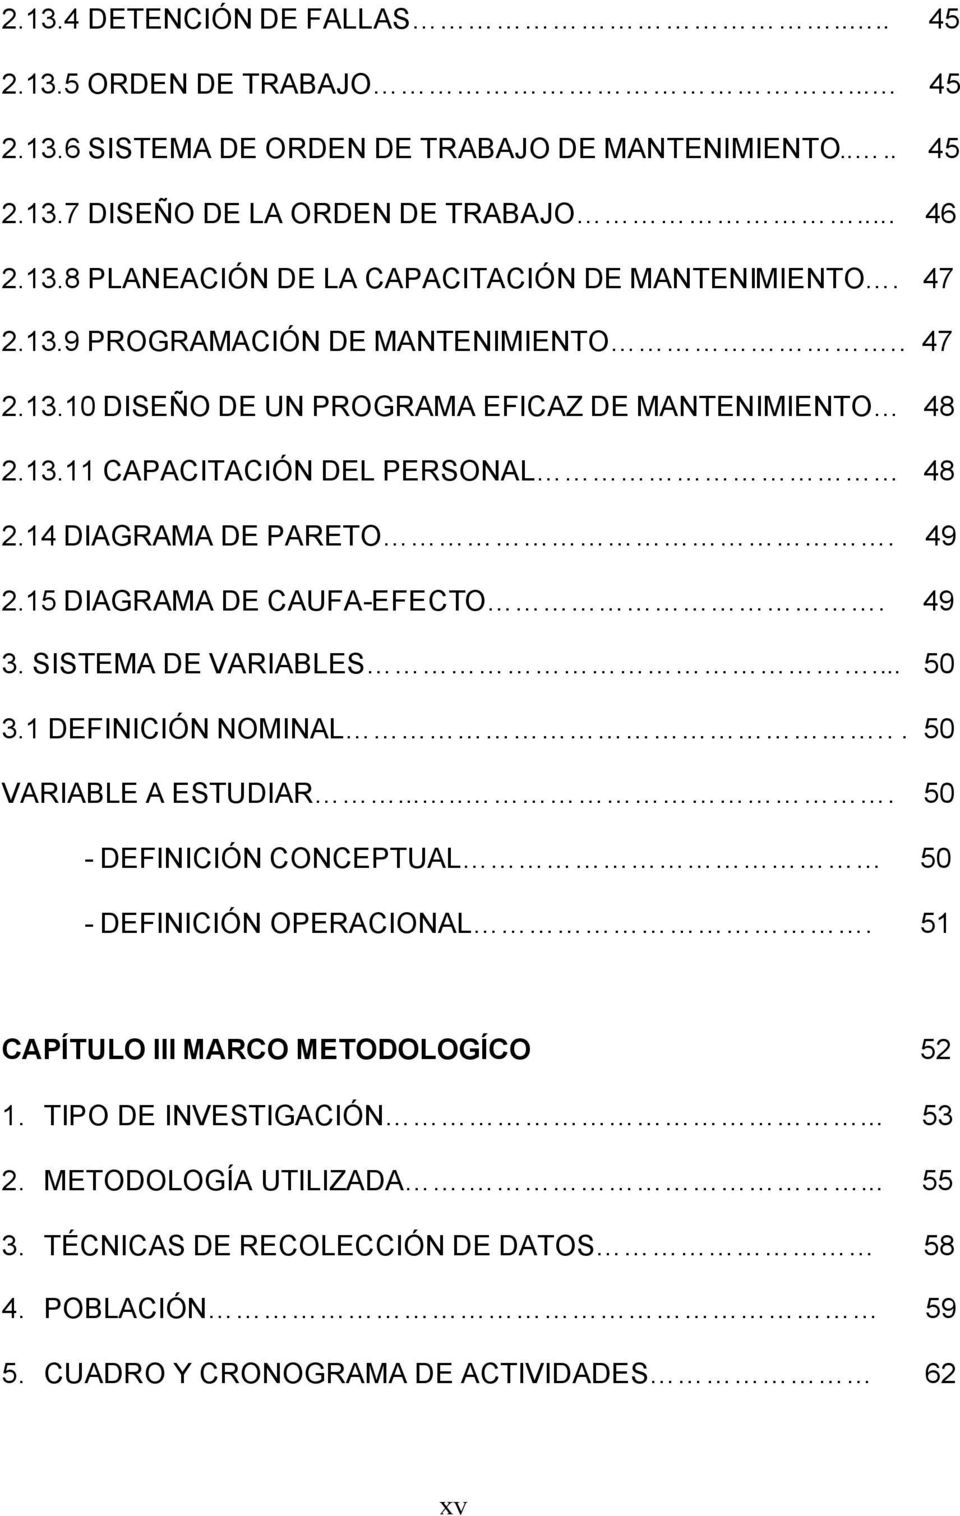 15 DIAGRAMA DE CAUFA-EFECTO. 49 3. SISTEMA DE VARIABLES... 50 3.1 DEFINICIÓN NOMINAL... 50 VARIABLE A ESTUDIAR...... 50 - DEFINICIÓN CONCEPTUAL 50 - DEFINICIÓN OPERACIONAL.